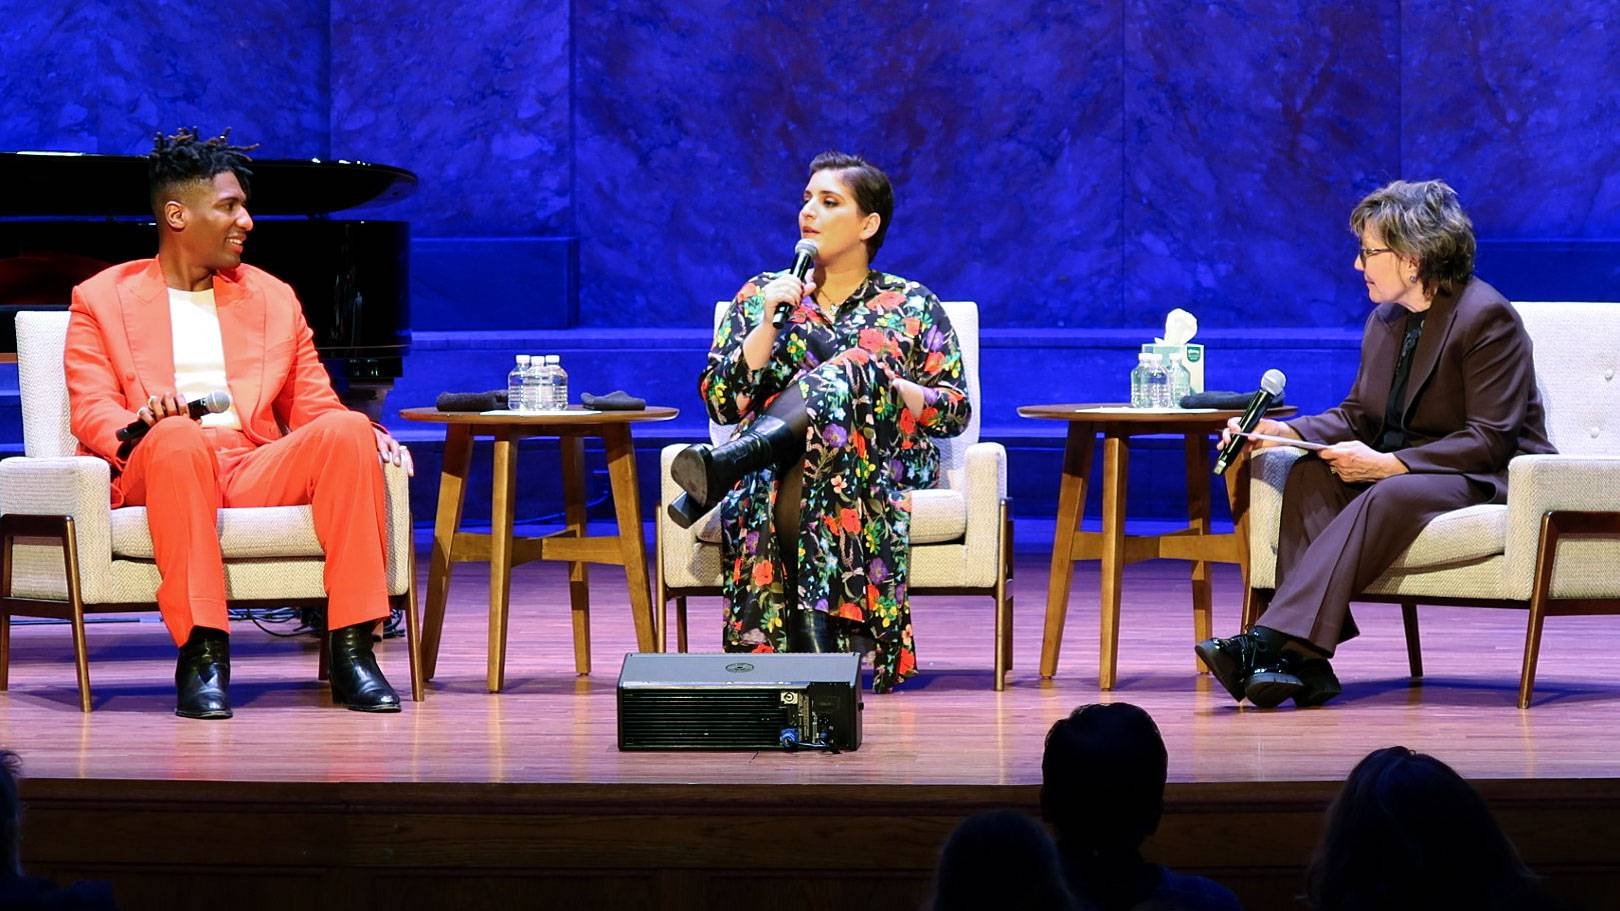 Jon Batiste, Suleika Jaouad, and Deborah Amos in conversation on stage at Alexander Hall